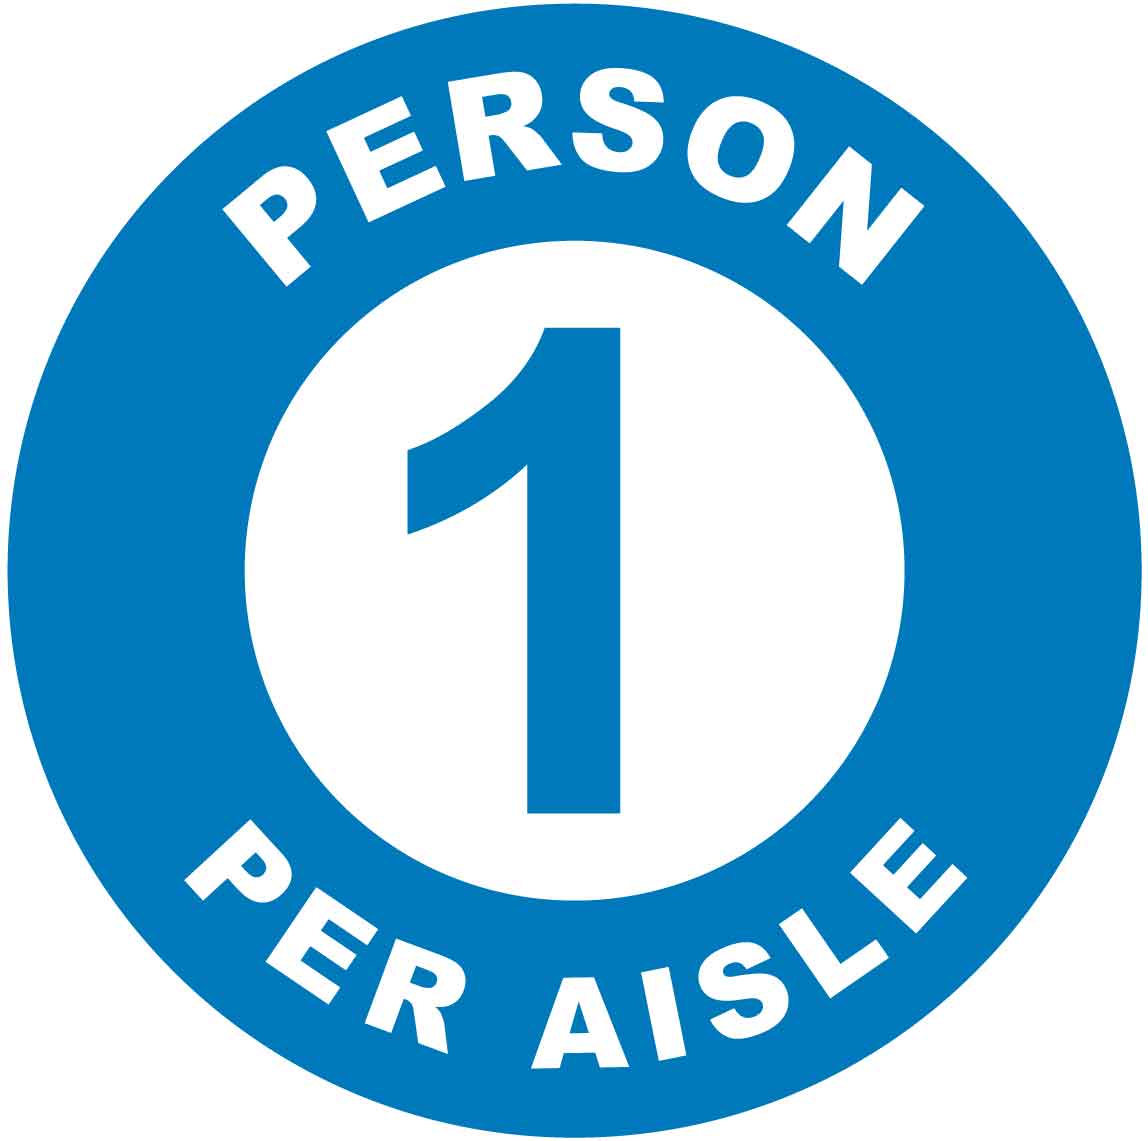 1 Person Per Aisle Decal